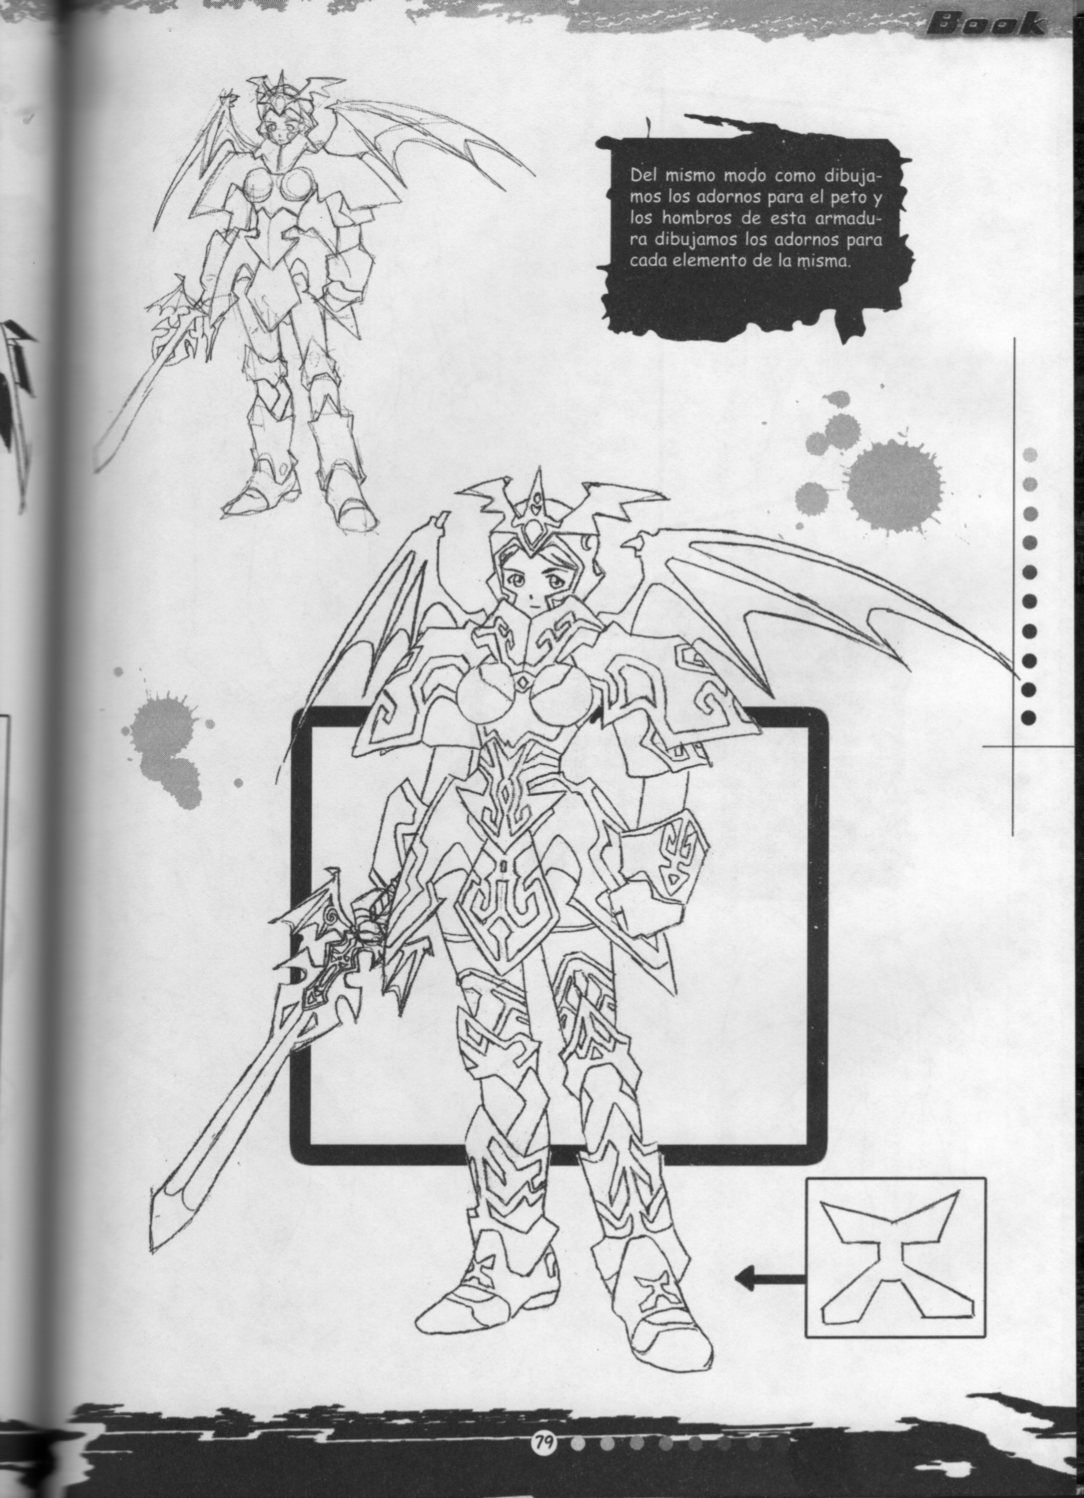 DibujArte Epecial Manga #18/20 - Armas armaduras y Personajes fantasticos [Spanish] 78